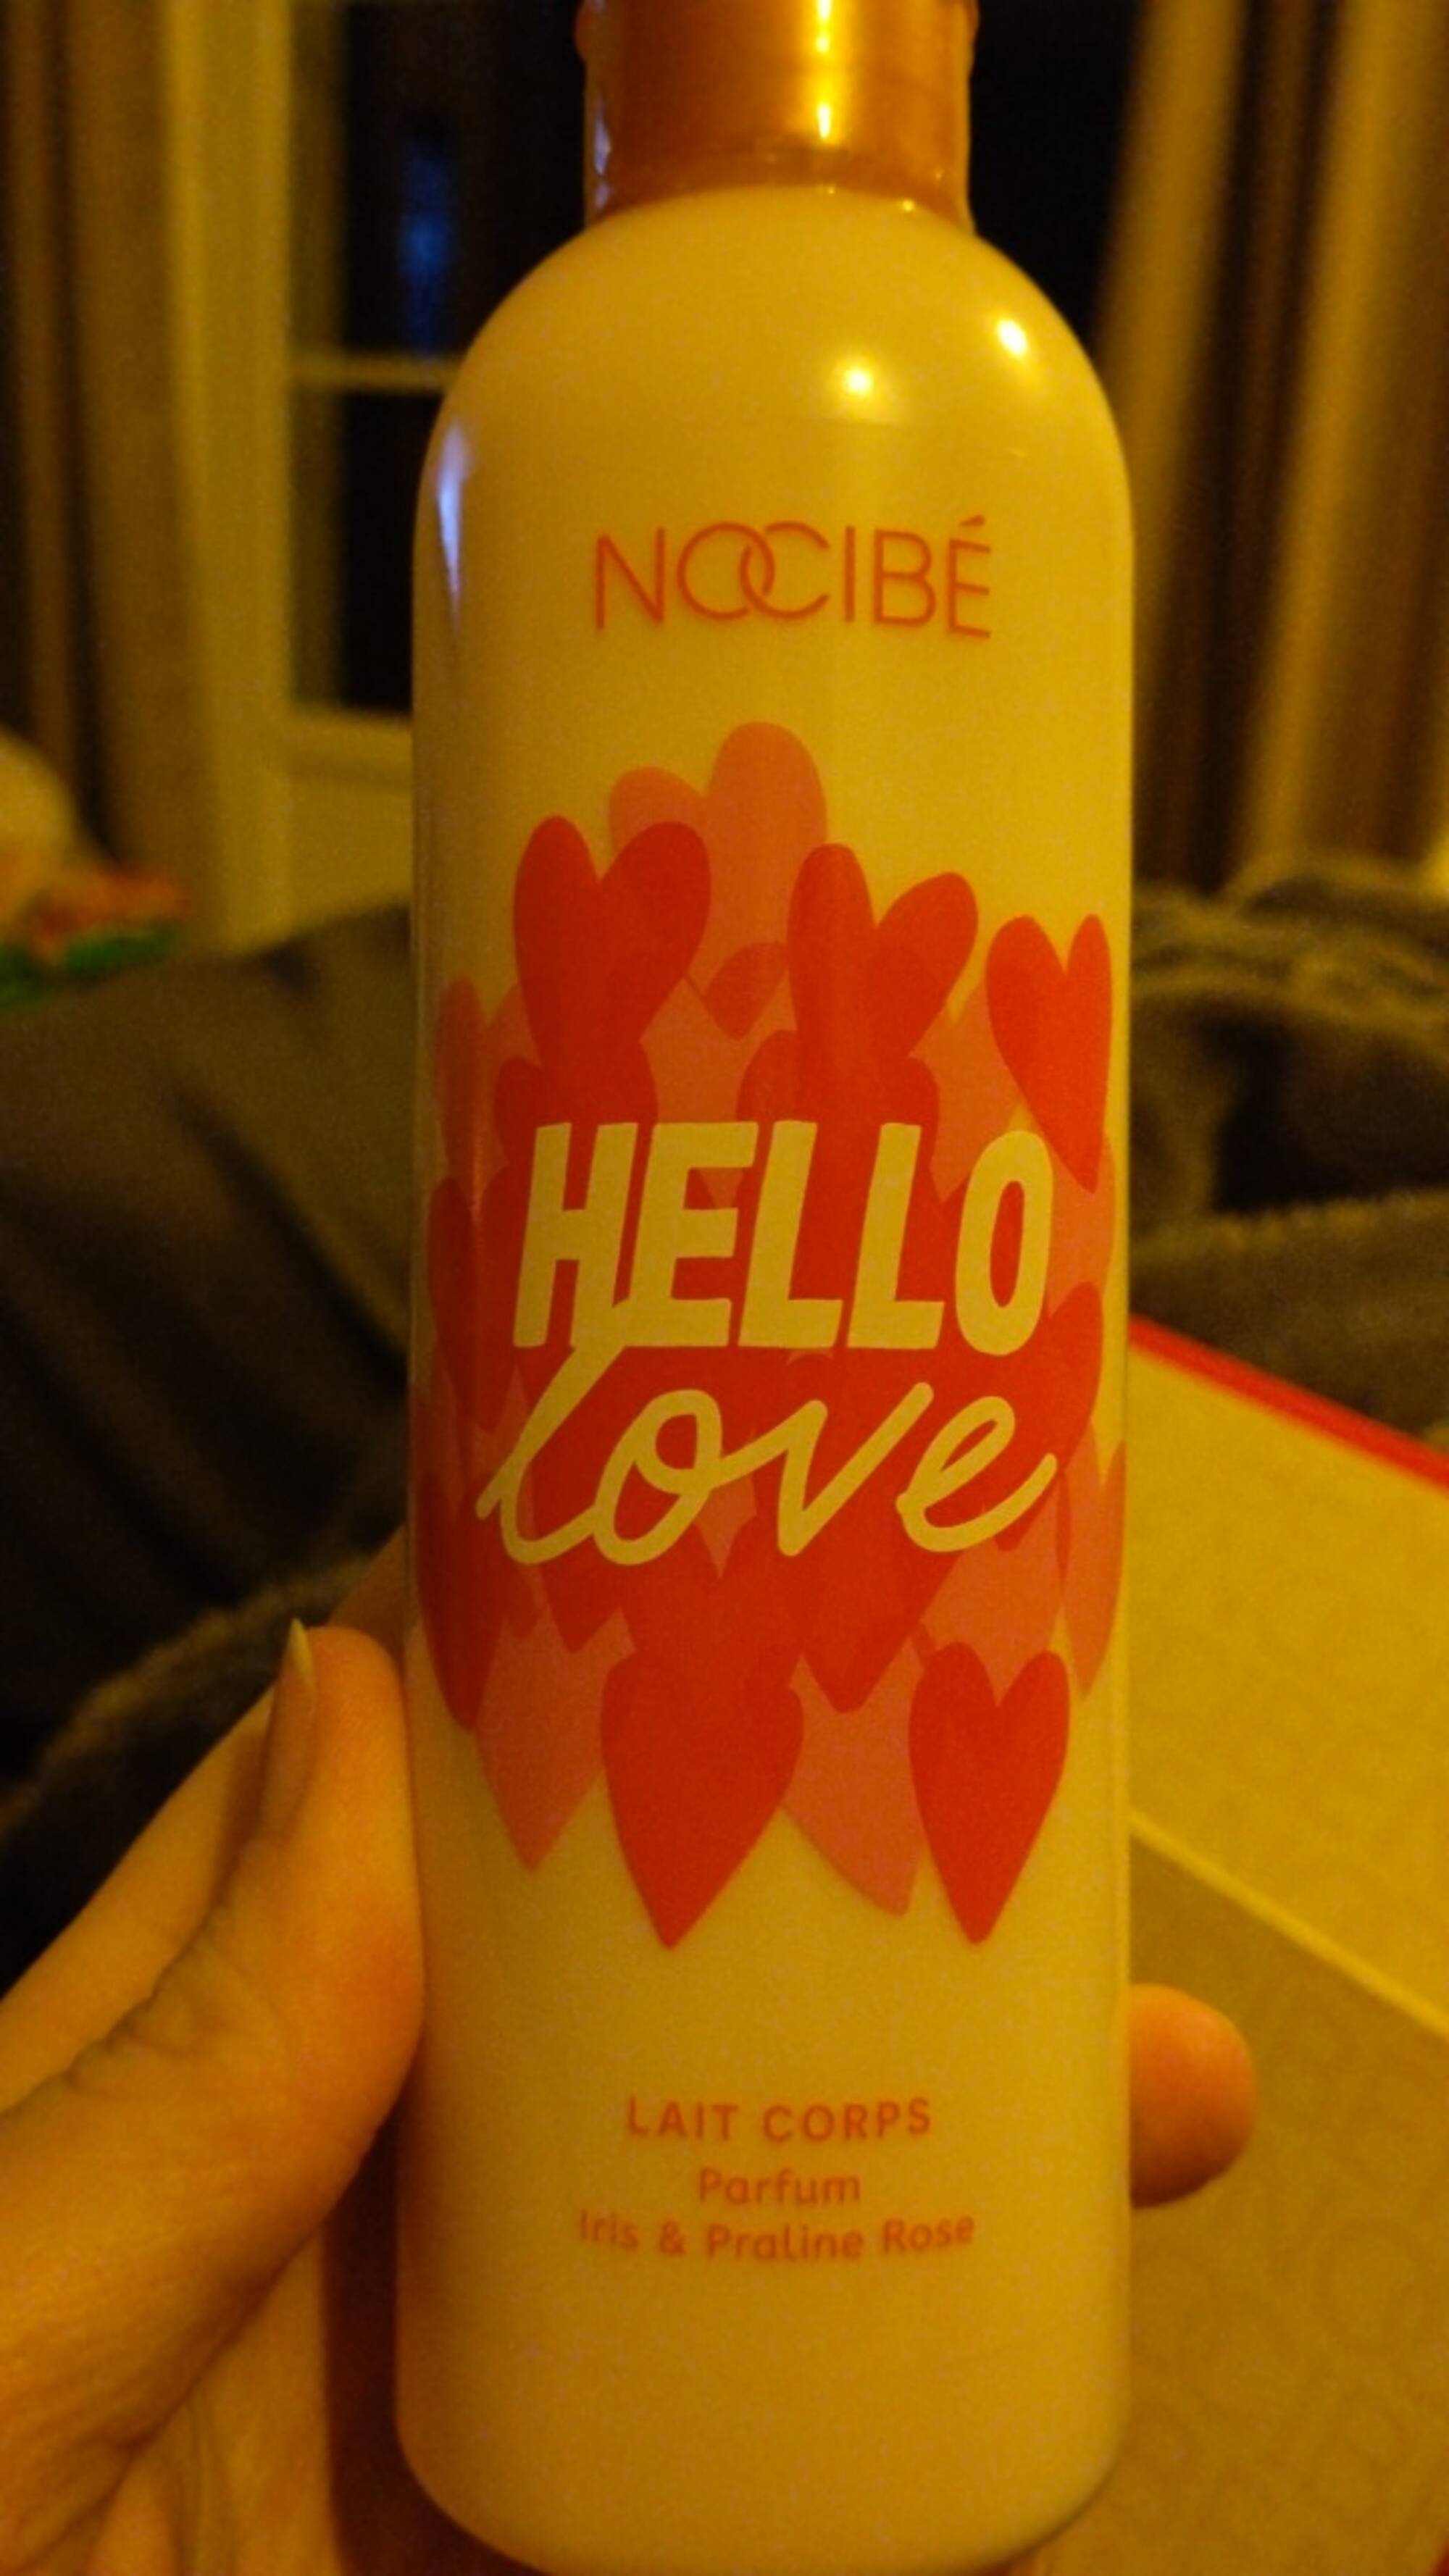 NOCIBÉ - Hello love - Lait corps parfum iris et praline rose